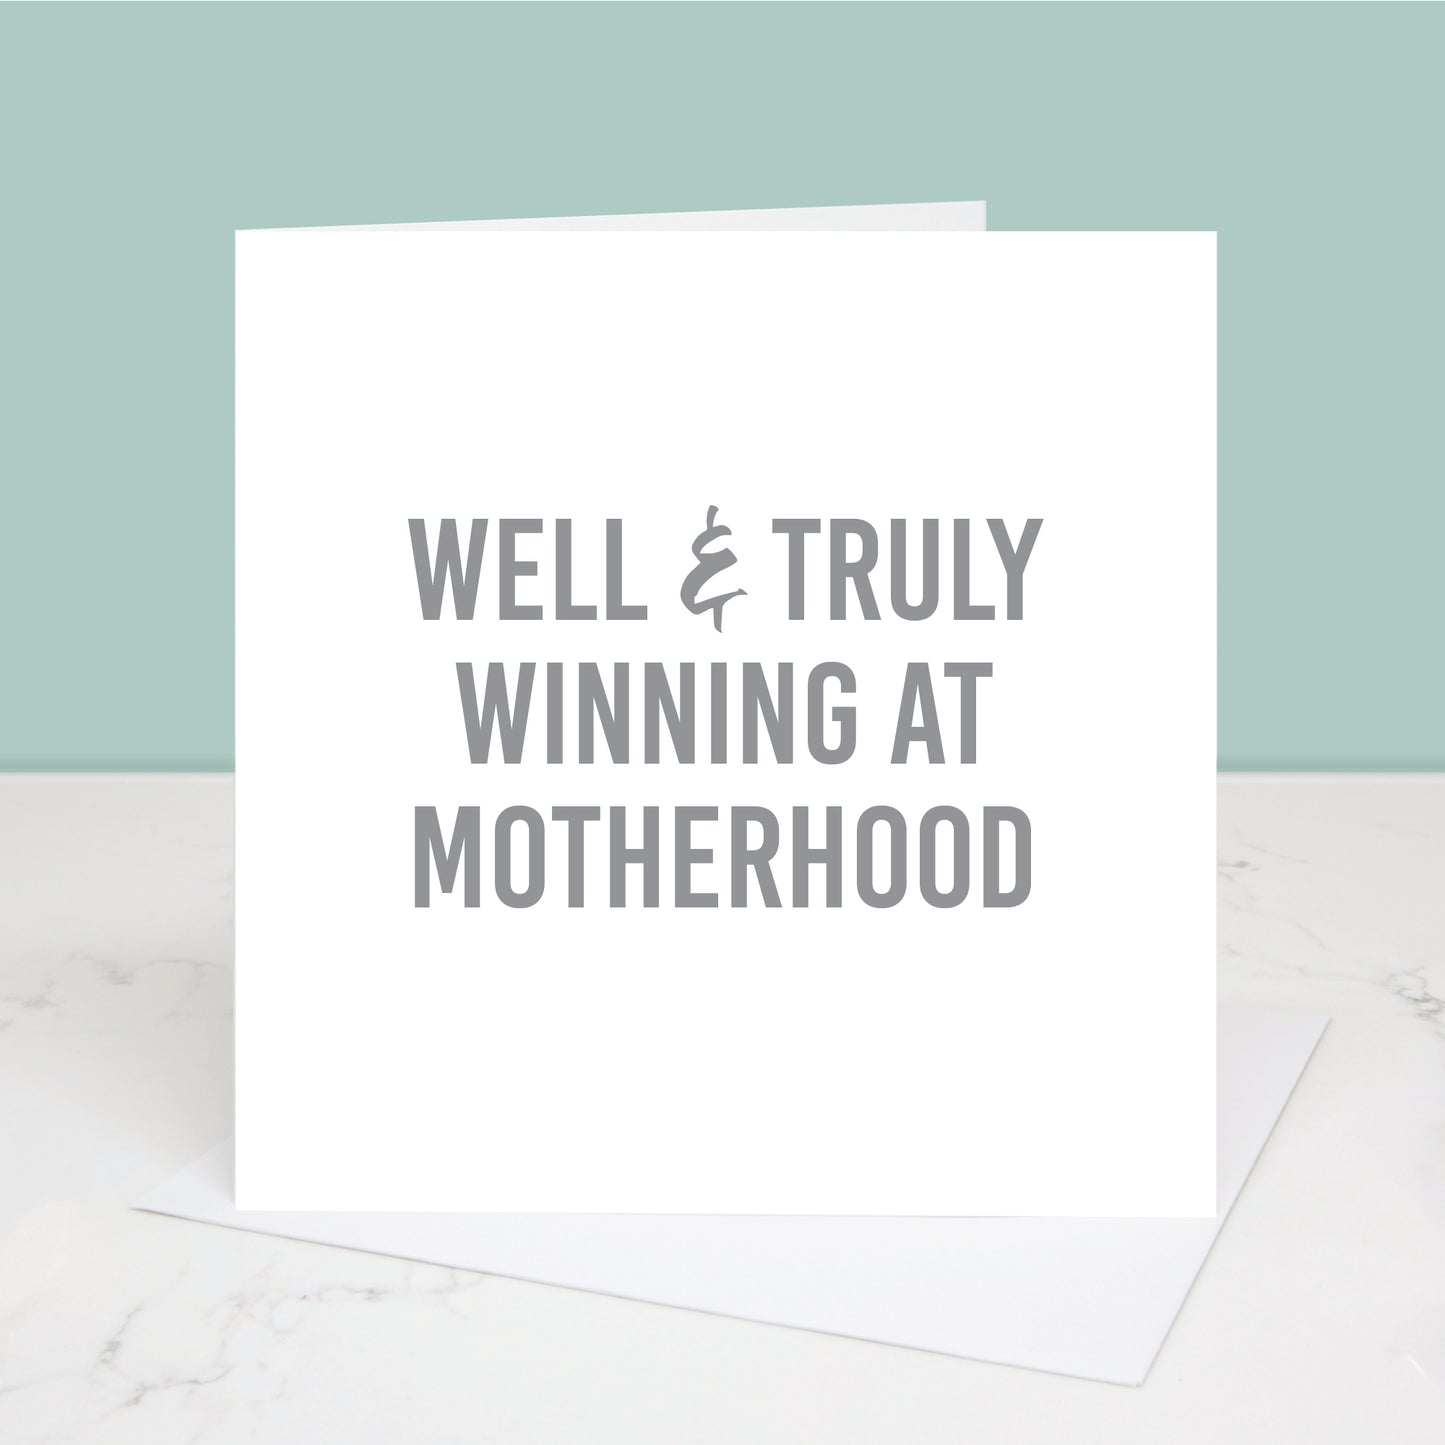 Winning at Motherhood Greetings Card